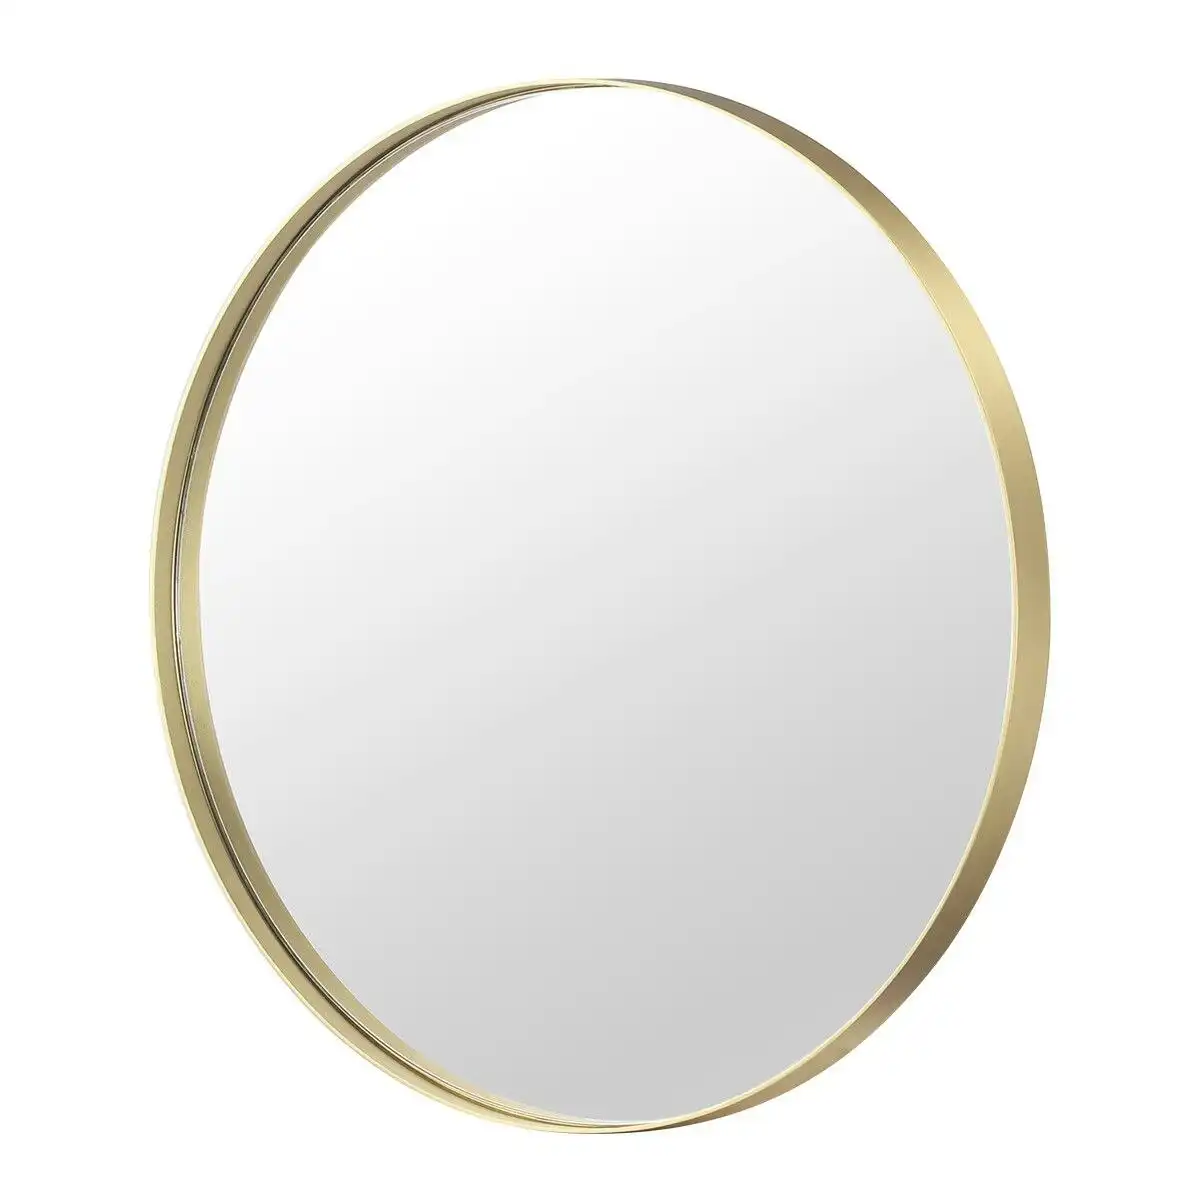 LUXSUITE 80cm Round Wall Mirror Bathroom Gold Standing Vanity Mount Circle Large Decorative Bedroom Hallway Makeup Shower Shaving